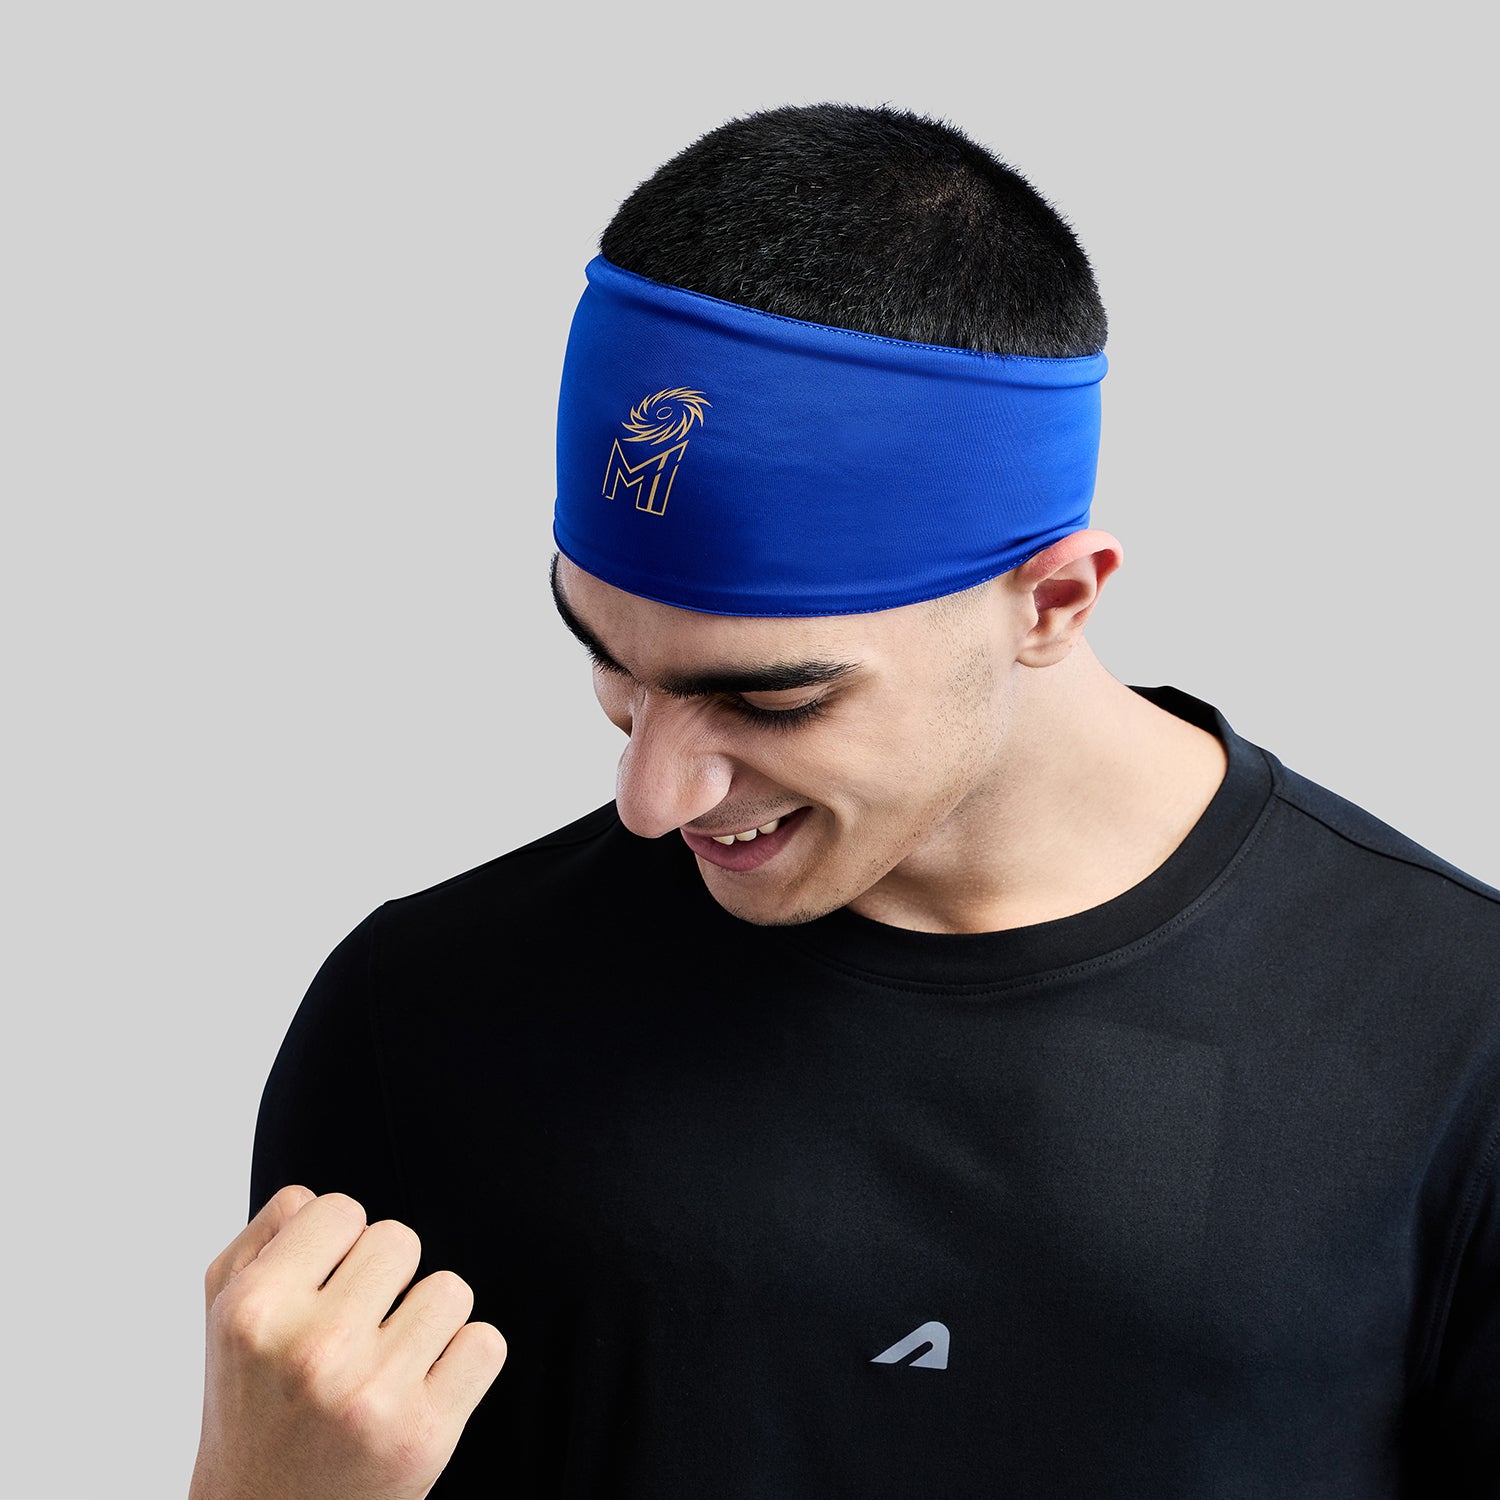 Official MI Merch - Headband